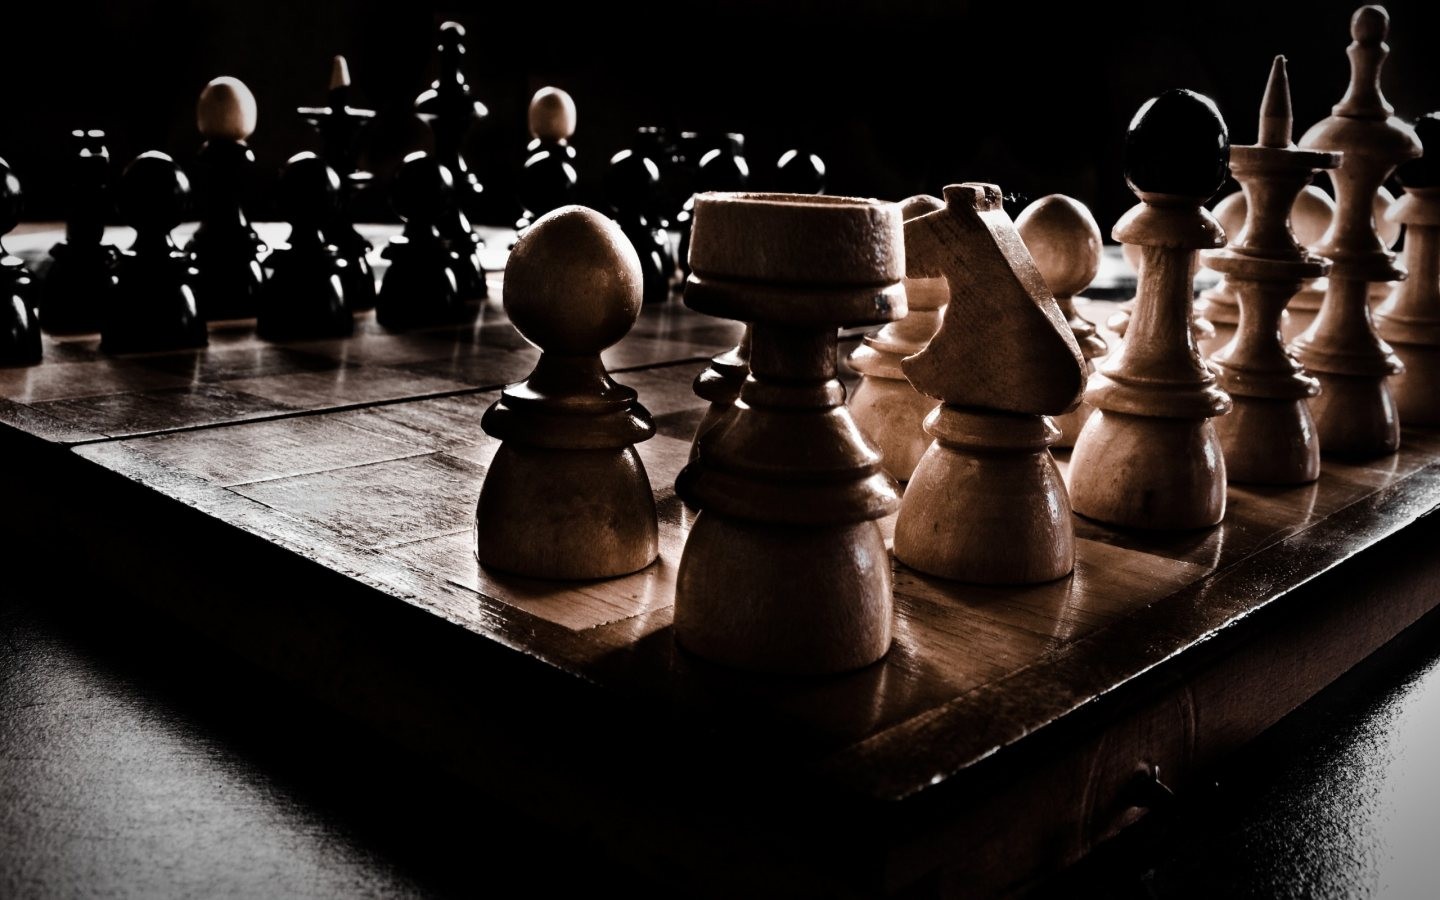 Chess Board Games Dark 1440x900